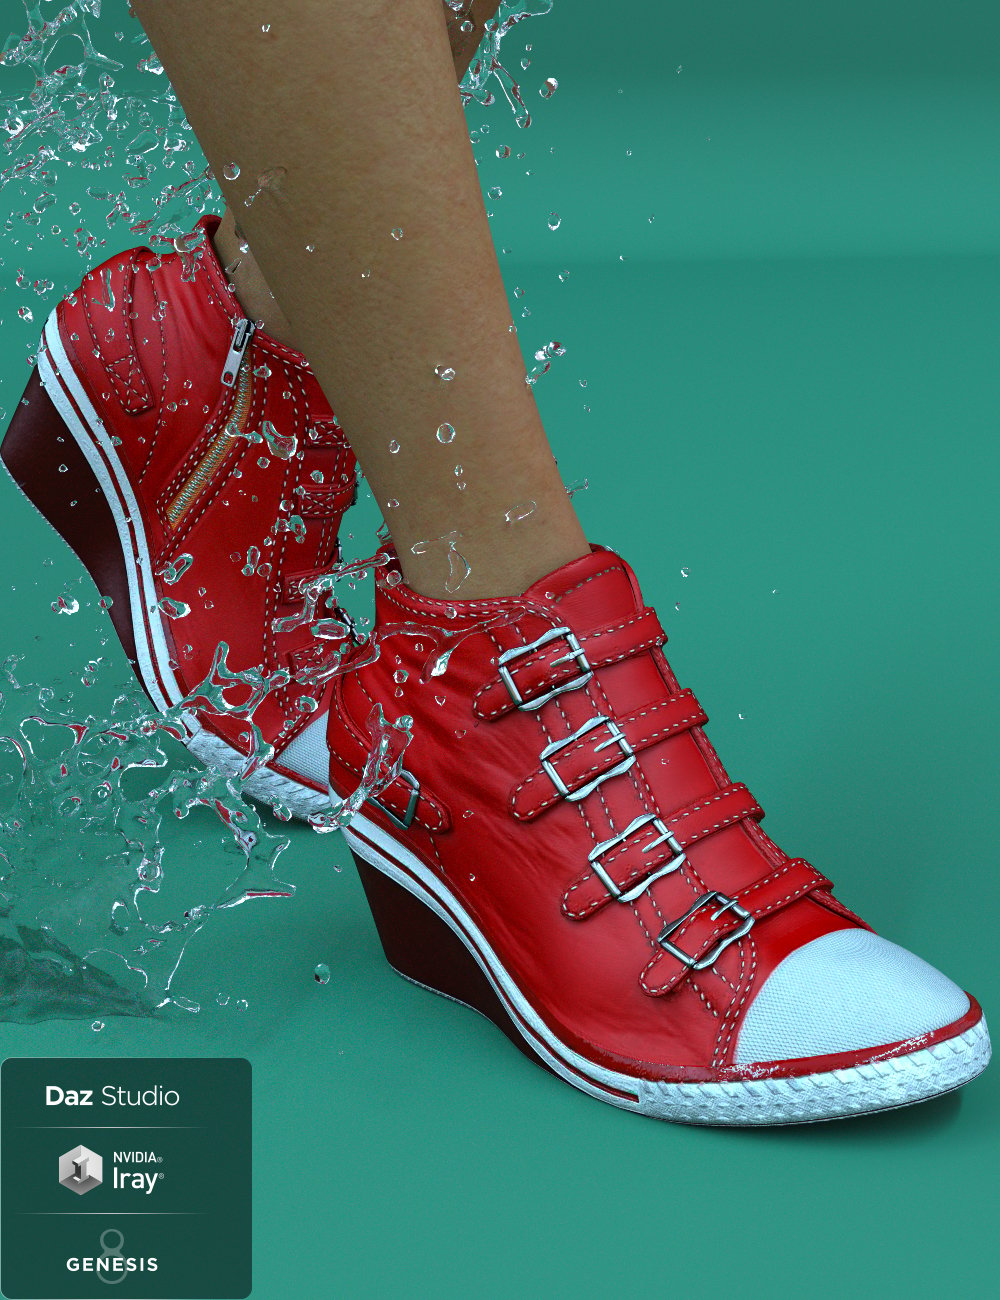 Wedge Sneakers for Genesis 8 Female(s) by: chungdan, 3D Models by Daz 3D